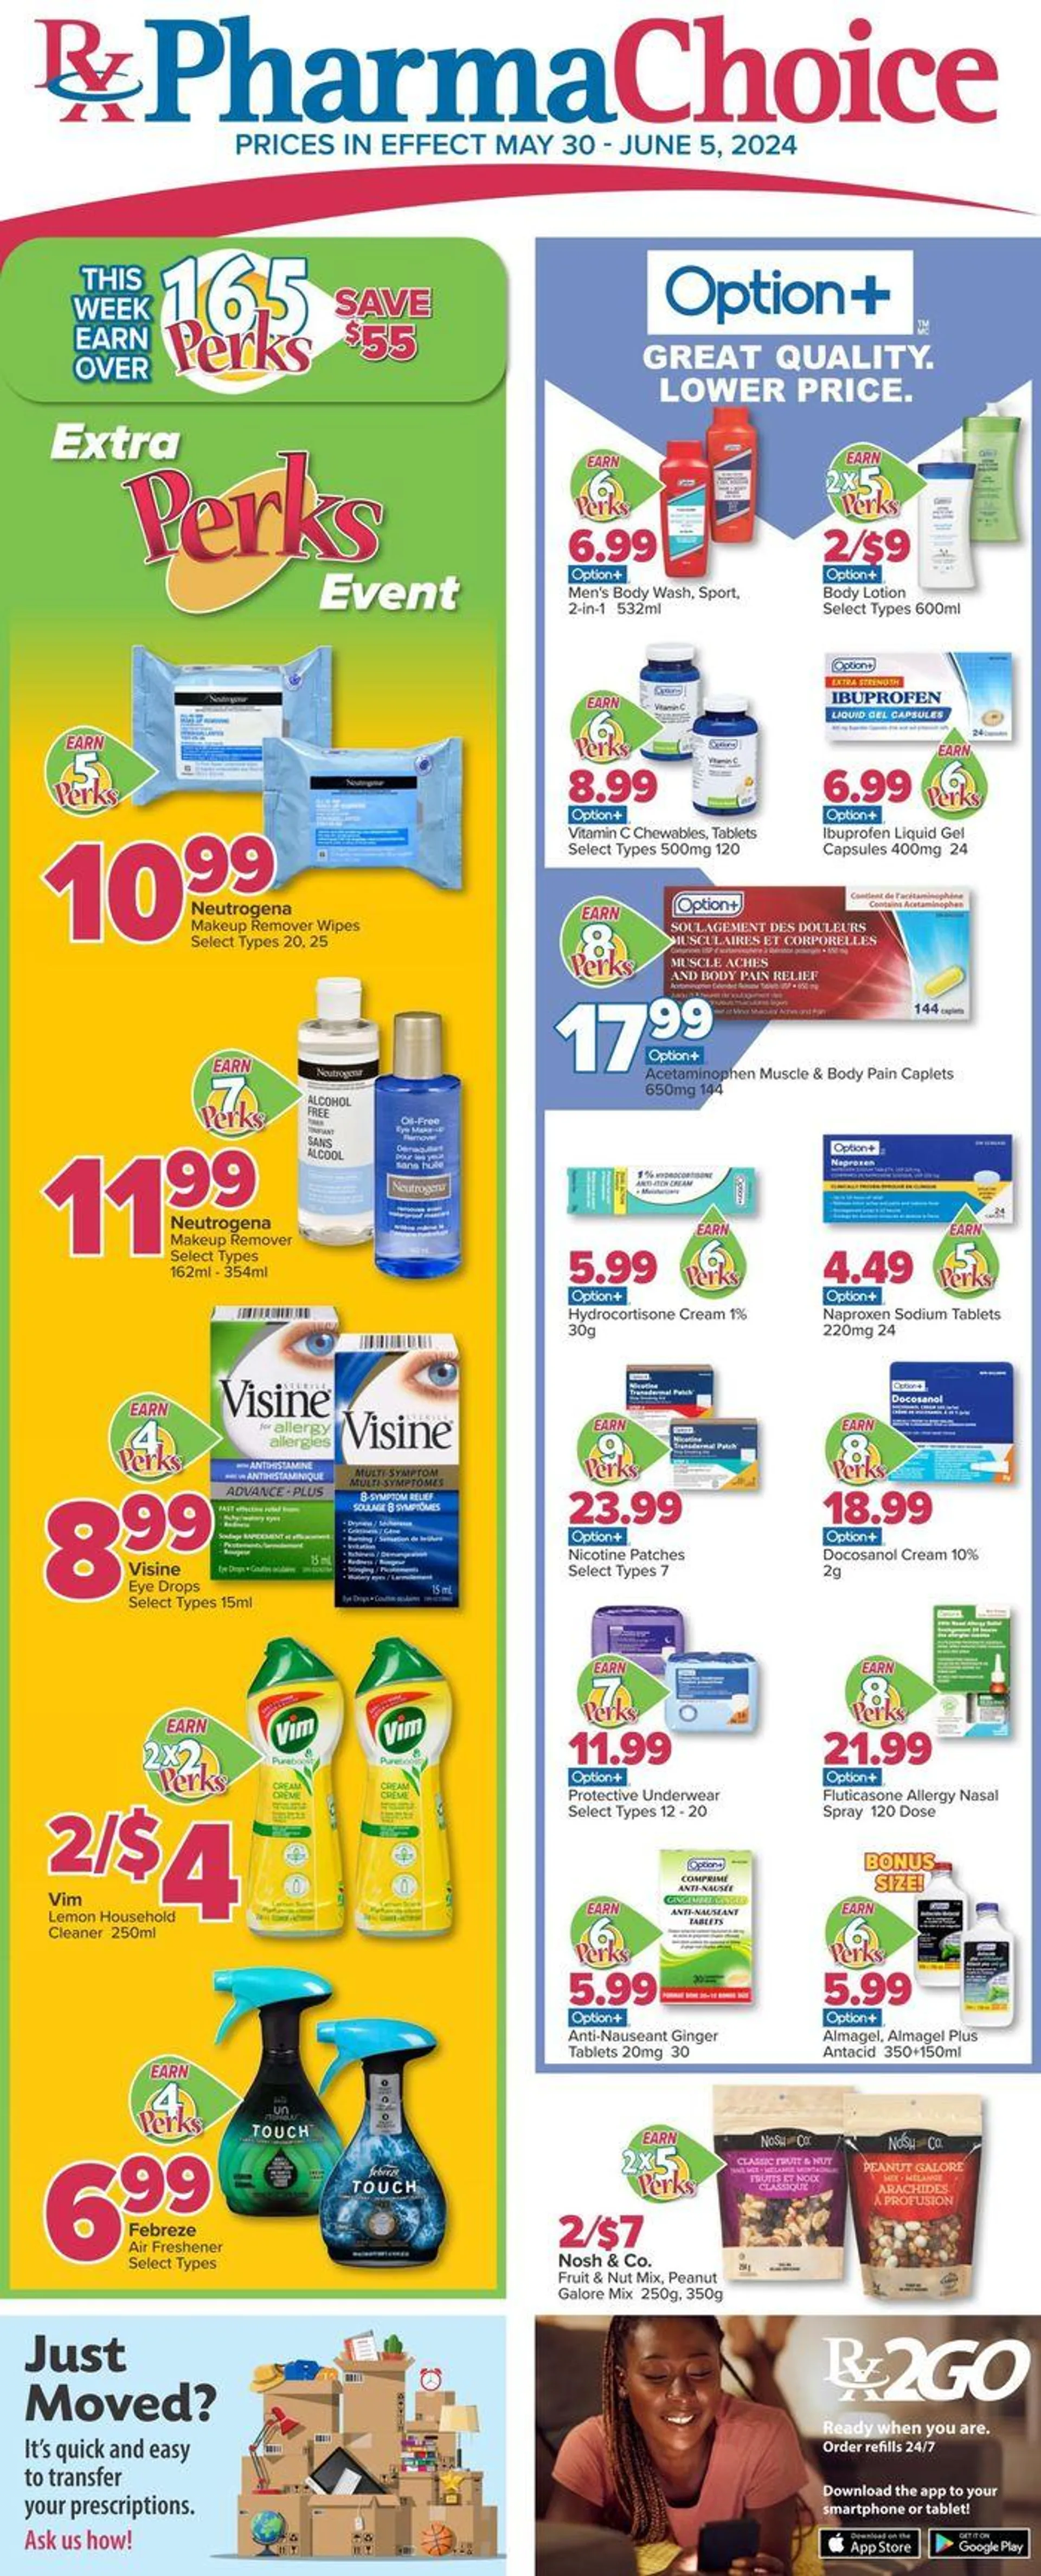 PharmaChoice Weekly ad - 1